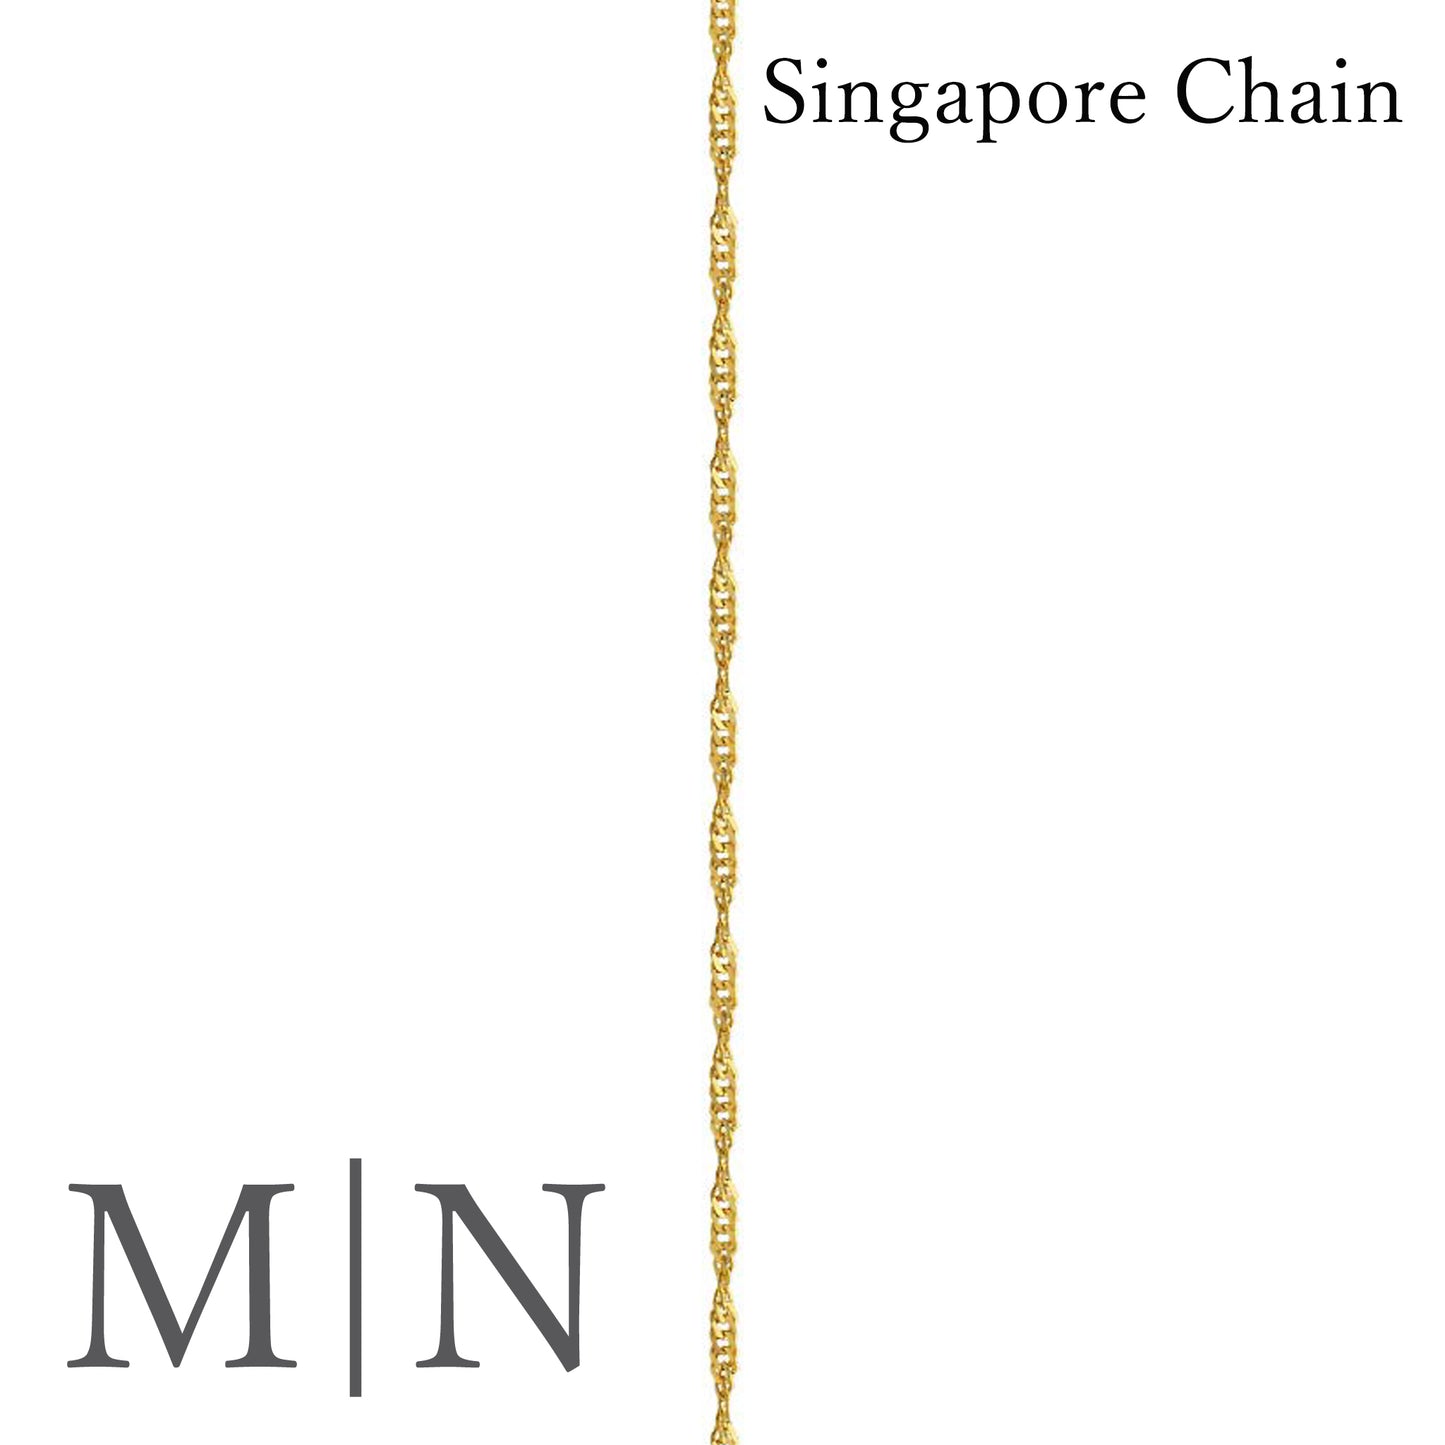 Singapore Chains